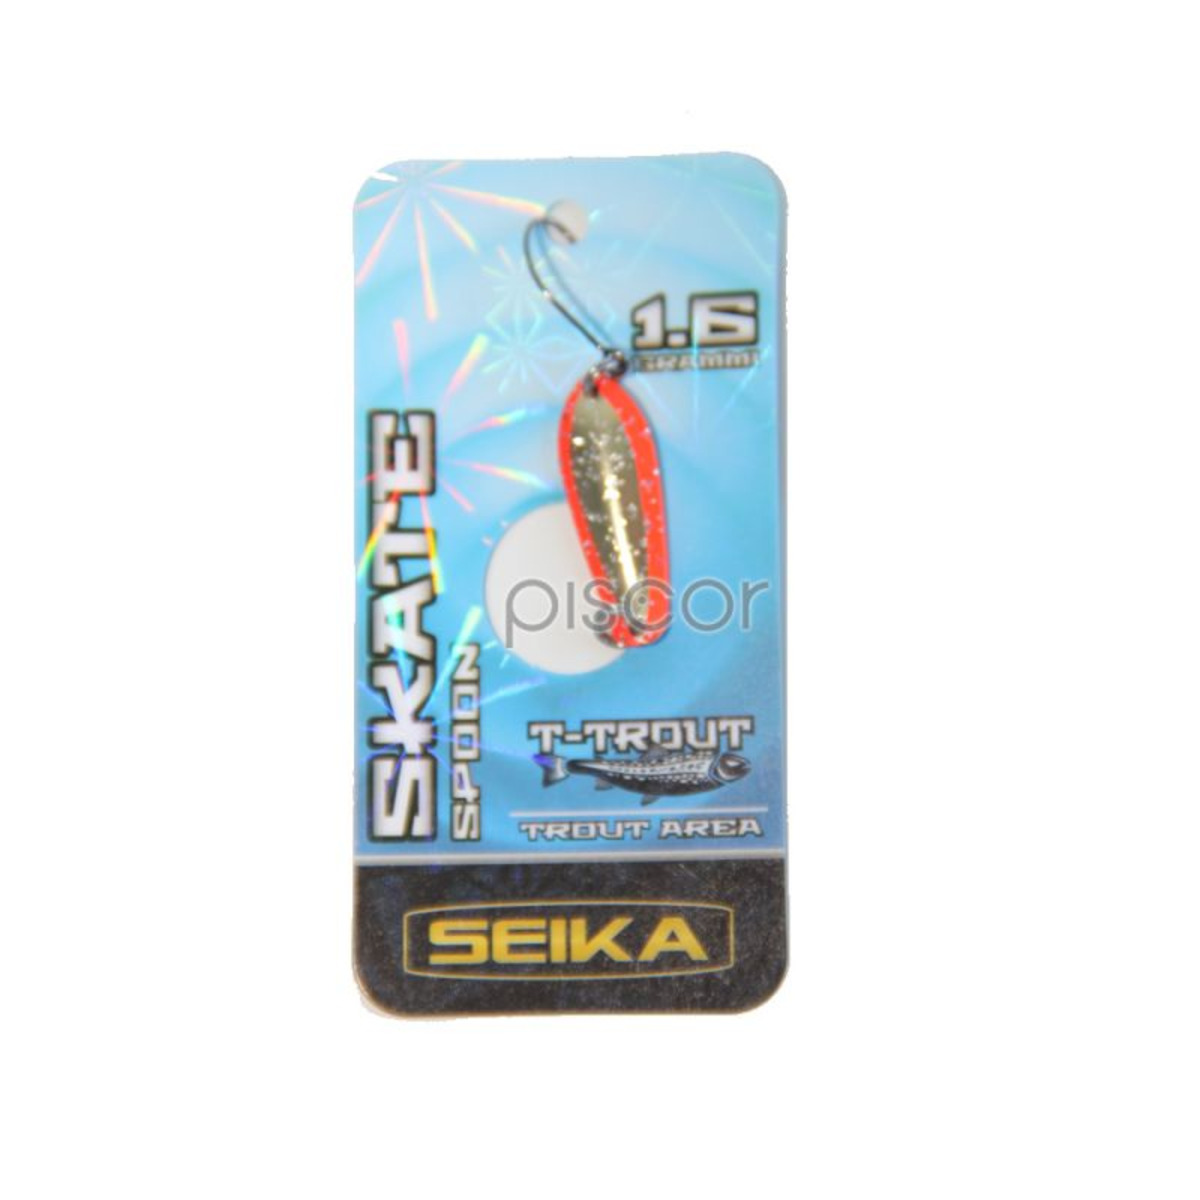 Seika Skate Spoon - 25 mm - 1.6 g - Glitter Gold Red